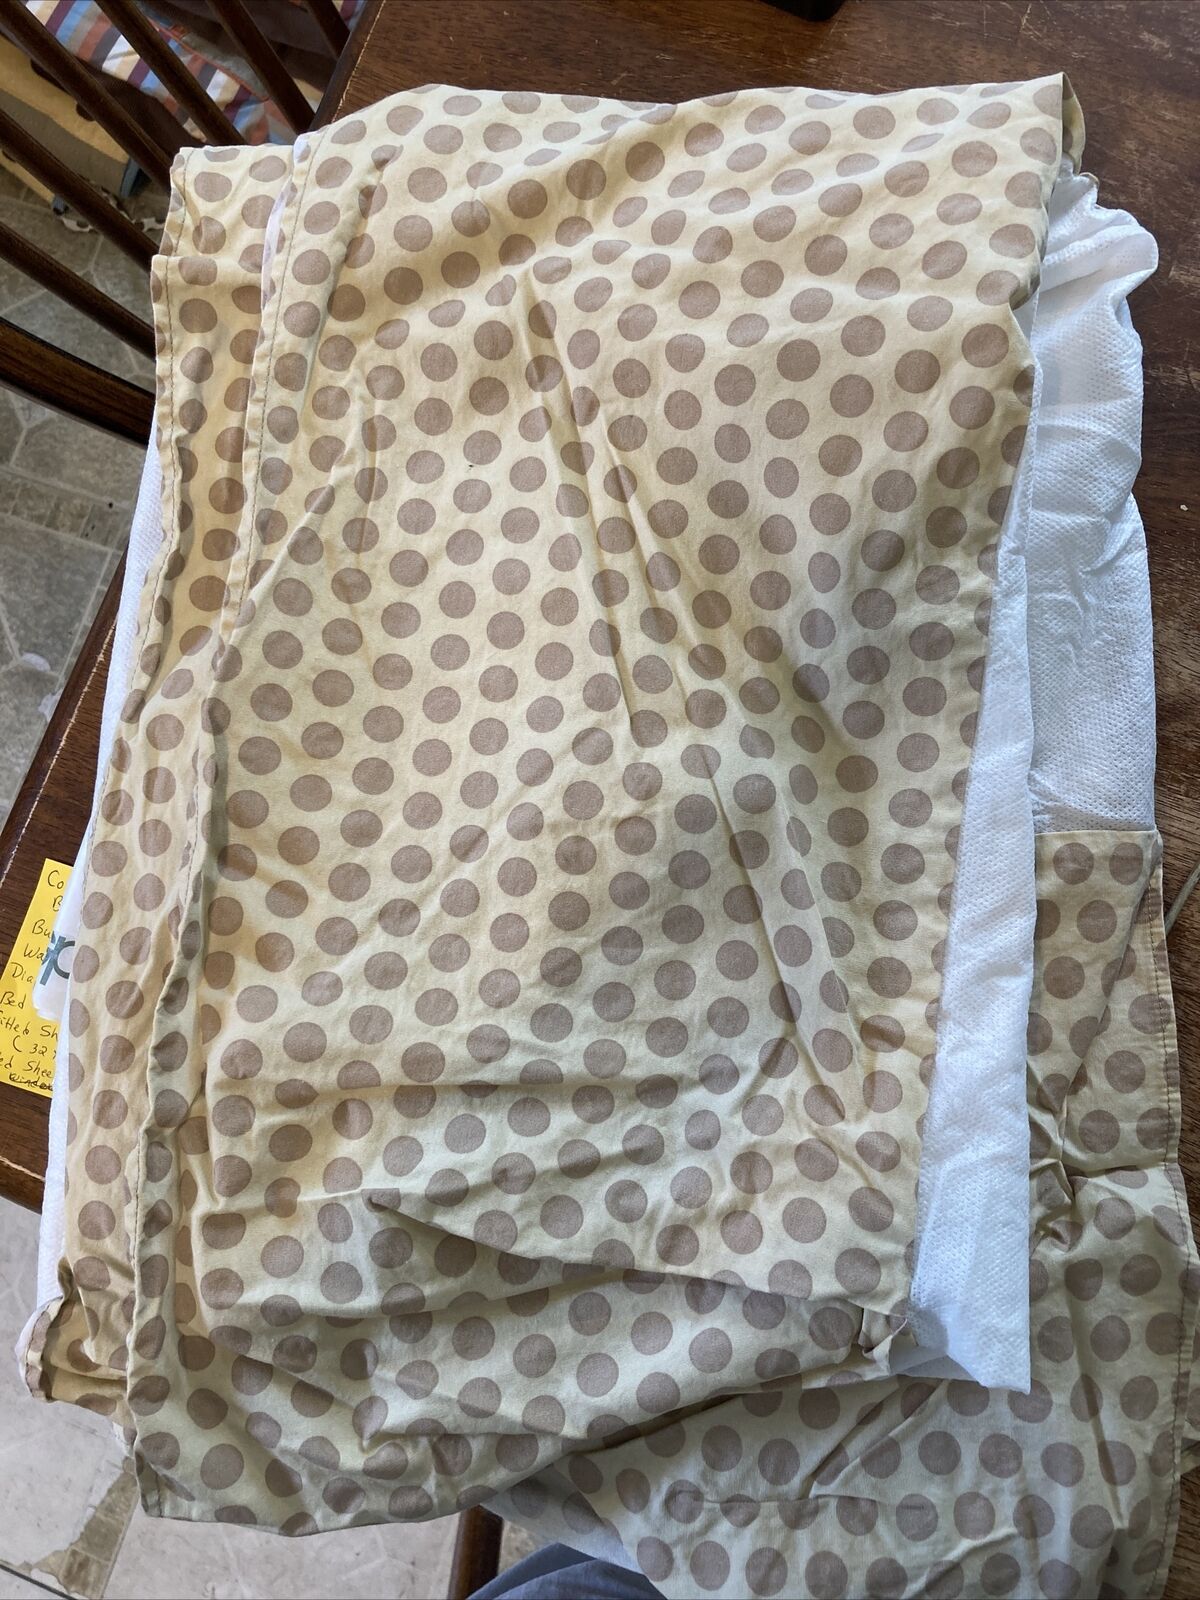 Polka Dot Infant Bed Skirt Dust Ruffle Gold Brown 27.5" X 49"